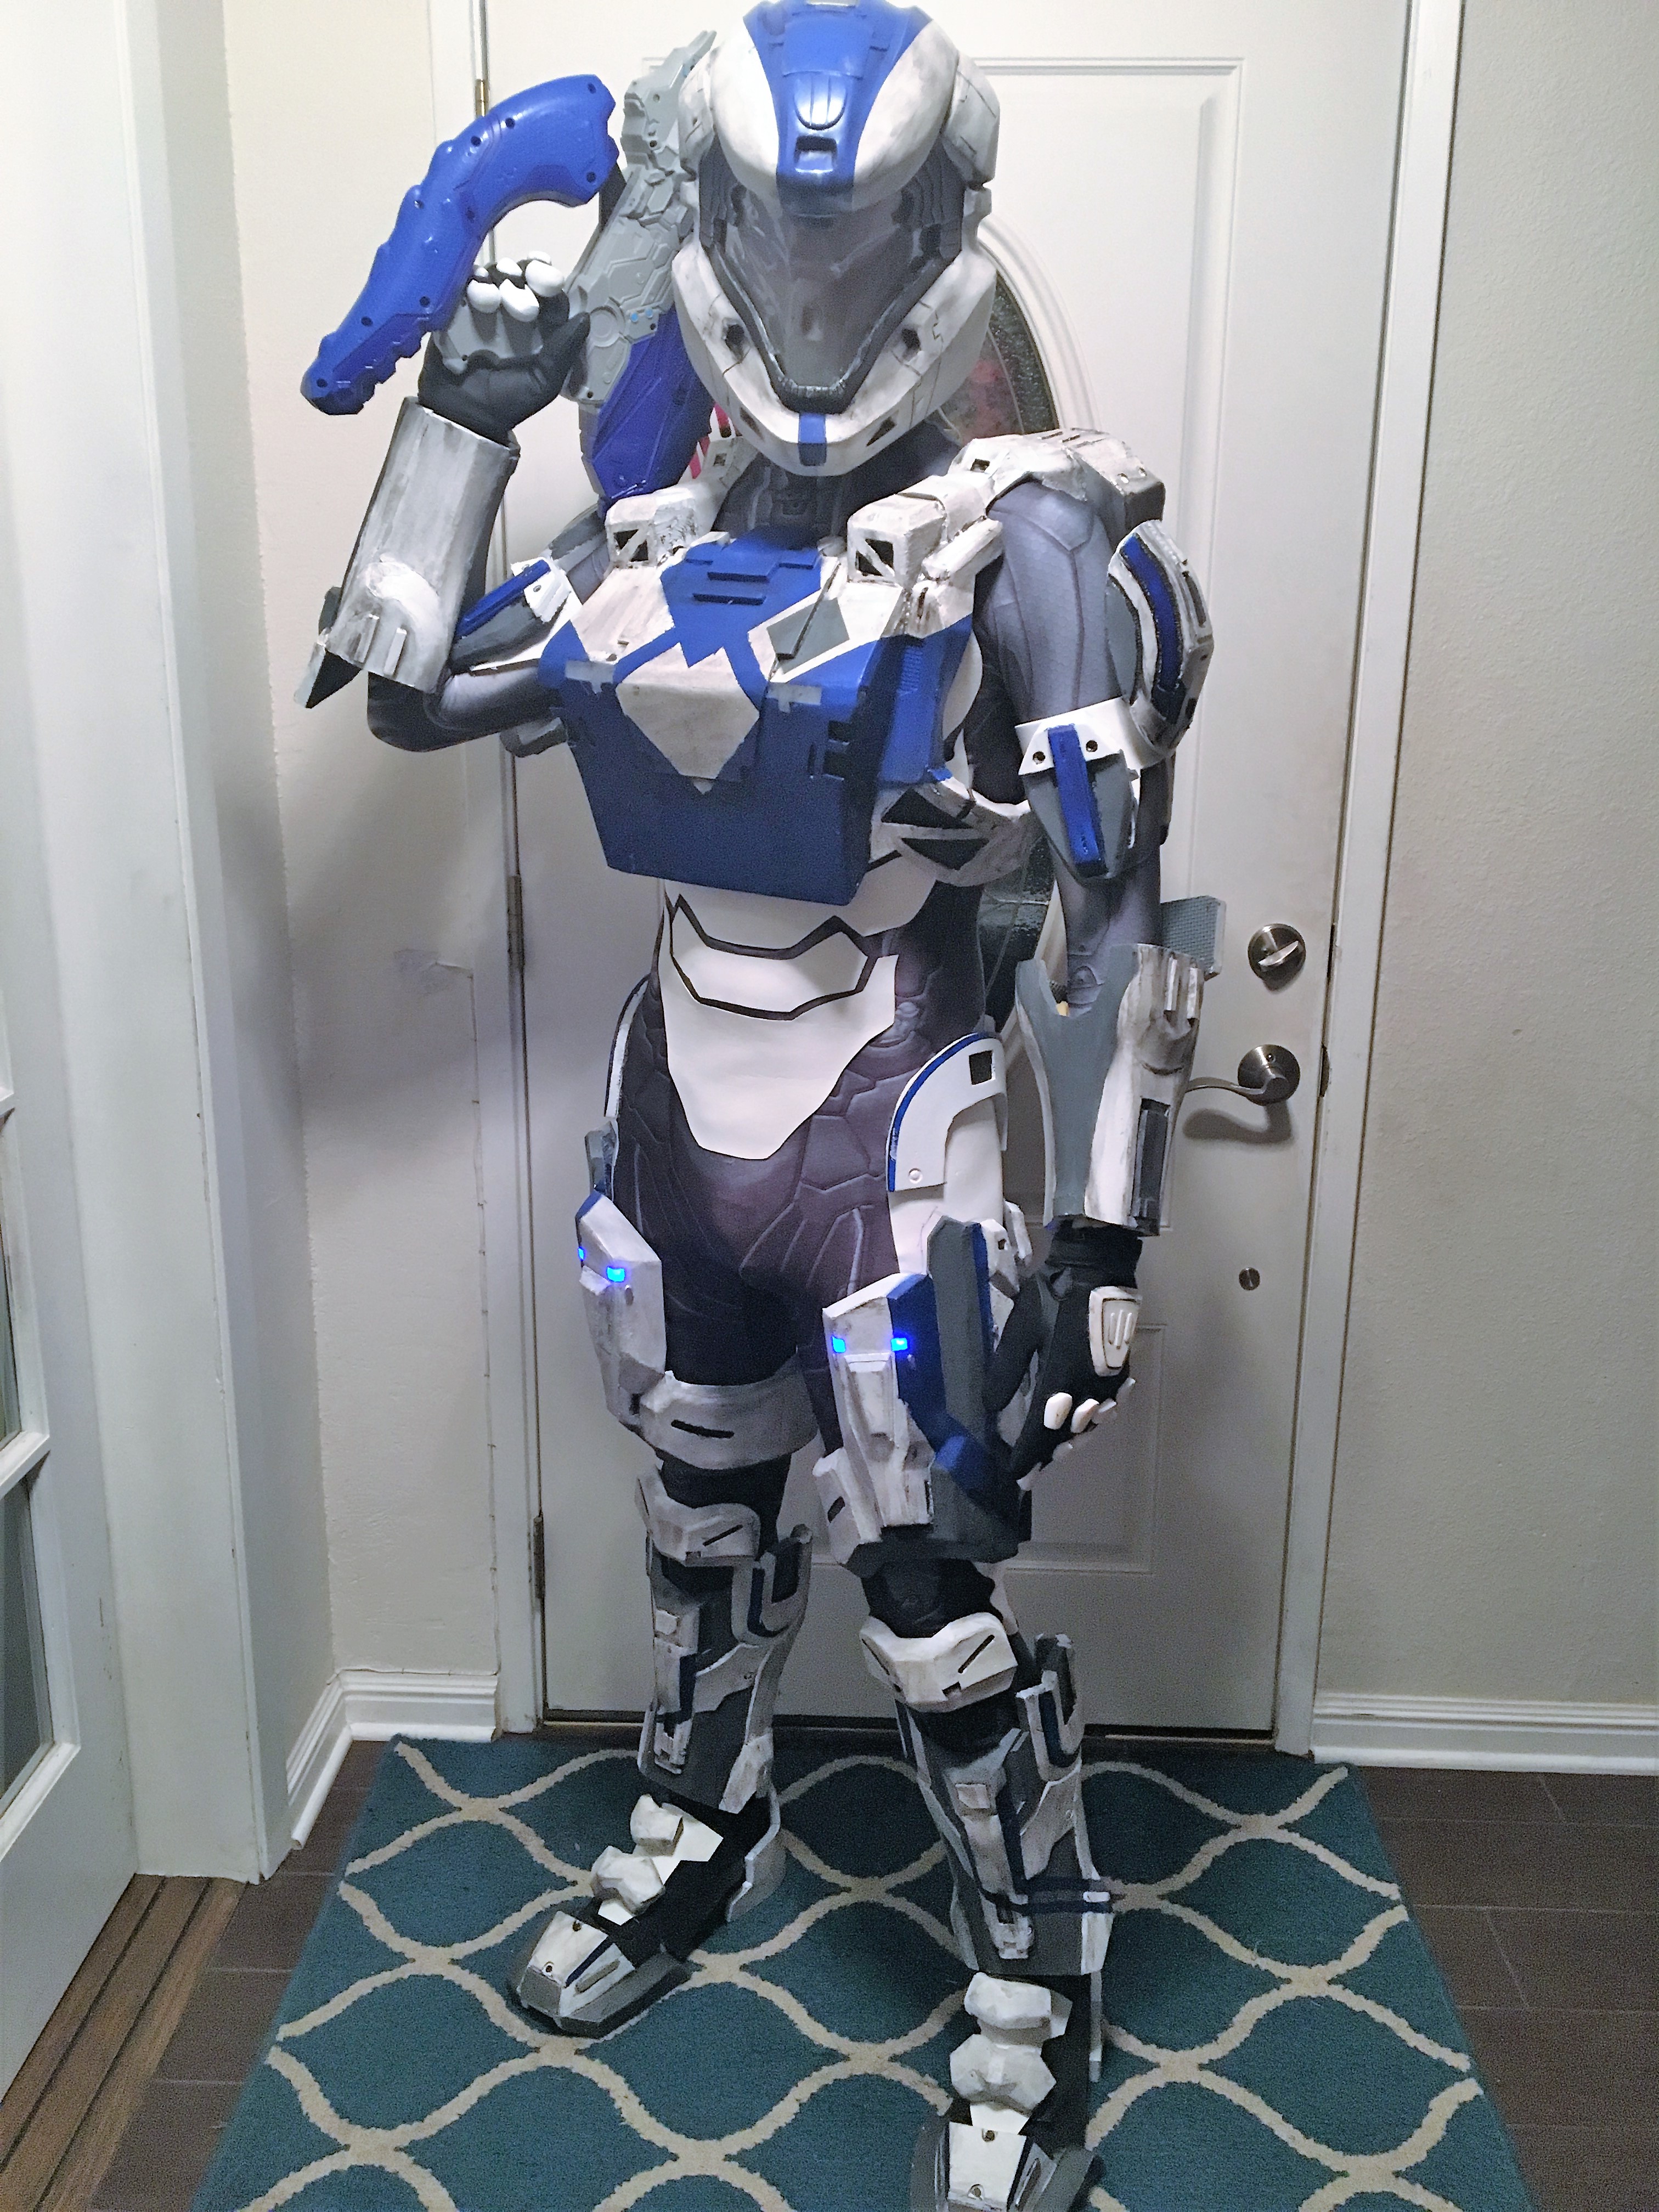 JoJo Pose Index  Halo Costume and Prop Maker Community - 405th